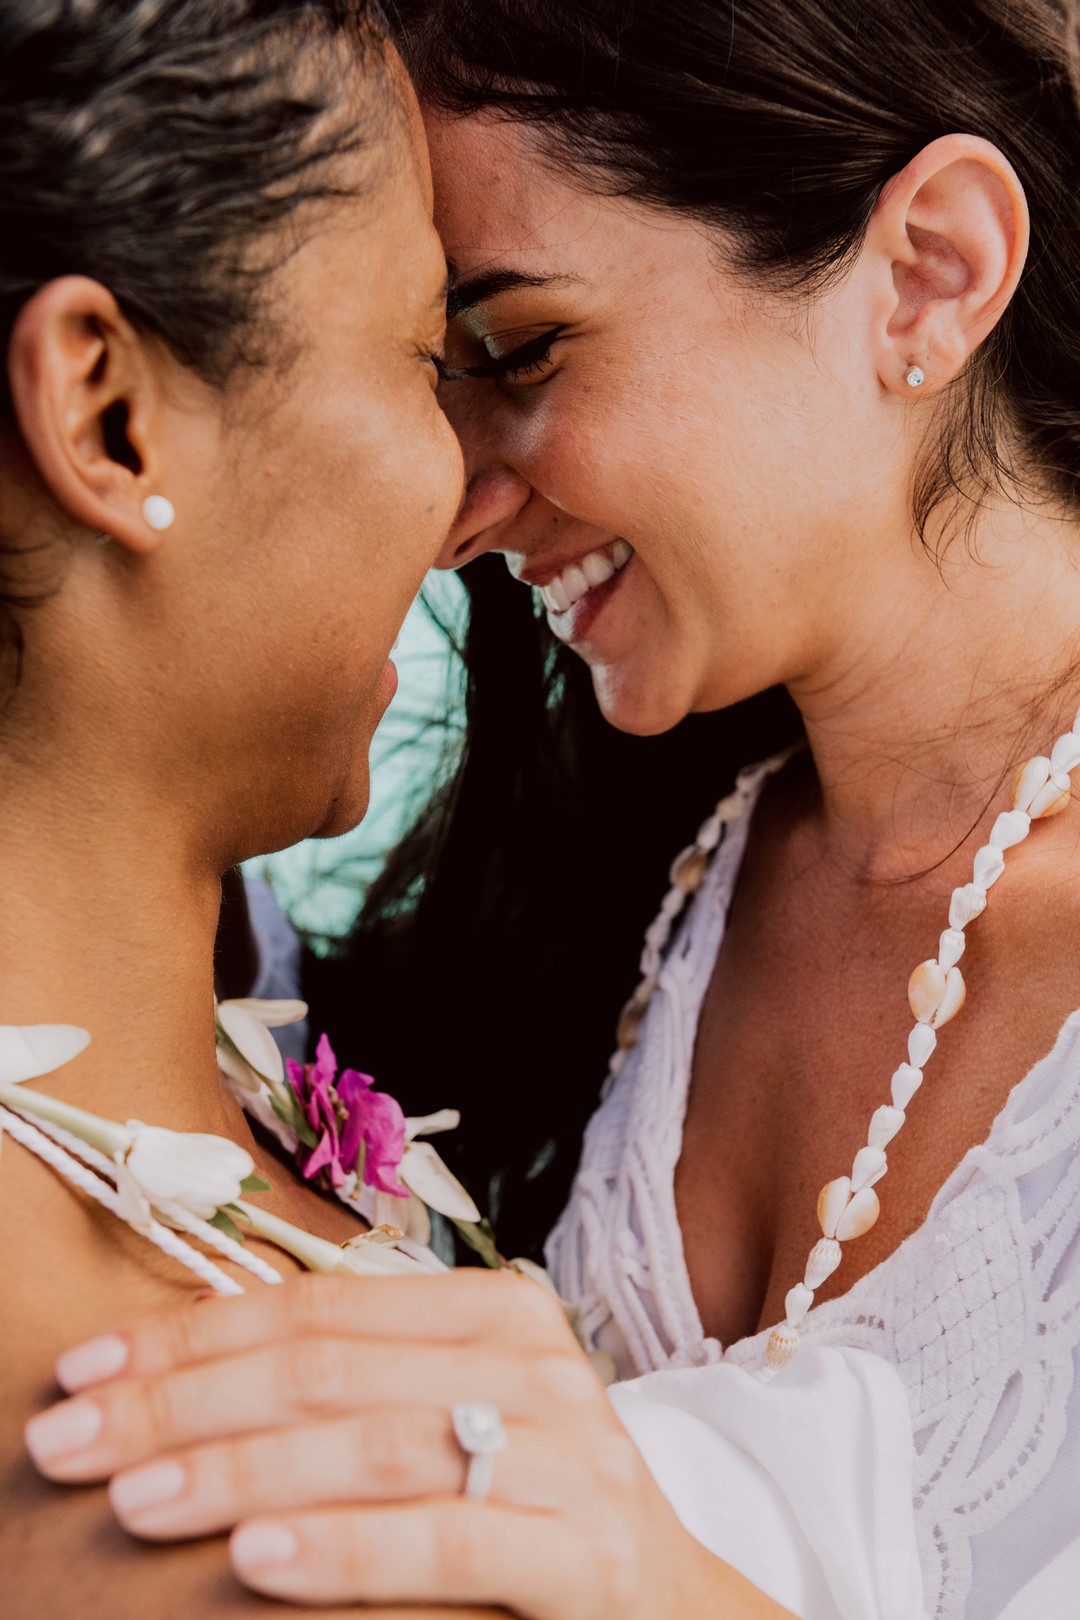 Beach honeymoon photos in Bora Bora two brides white dresses clear blue oceans palm trees